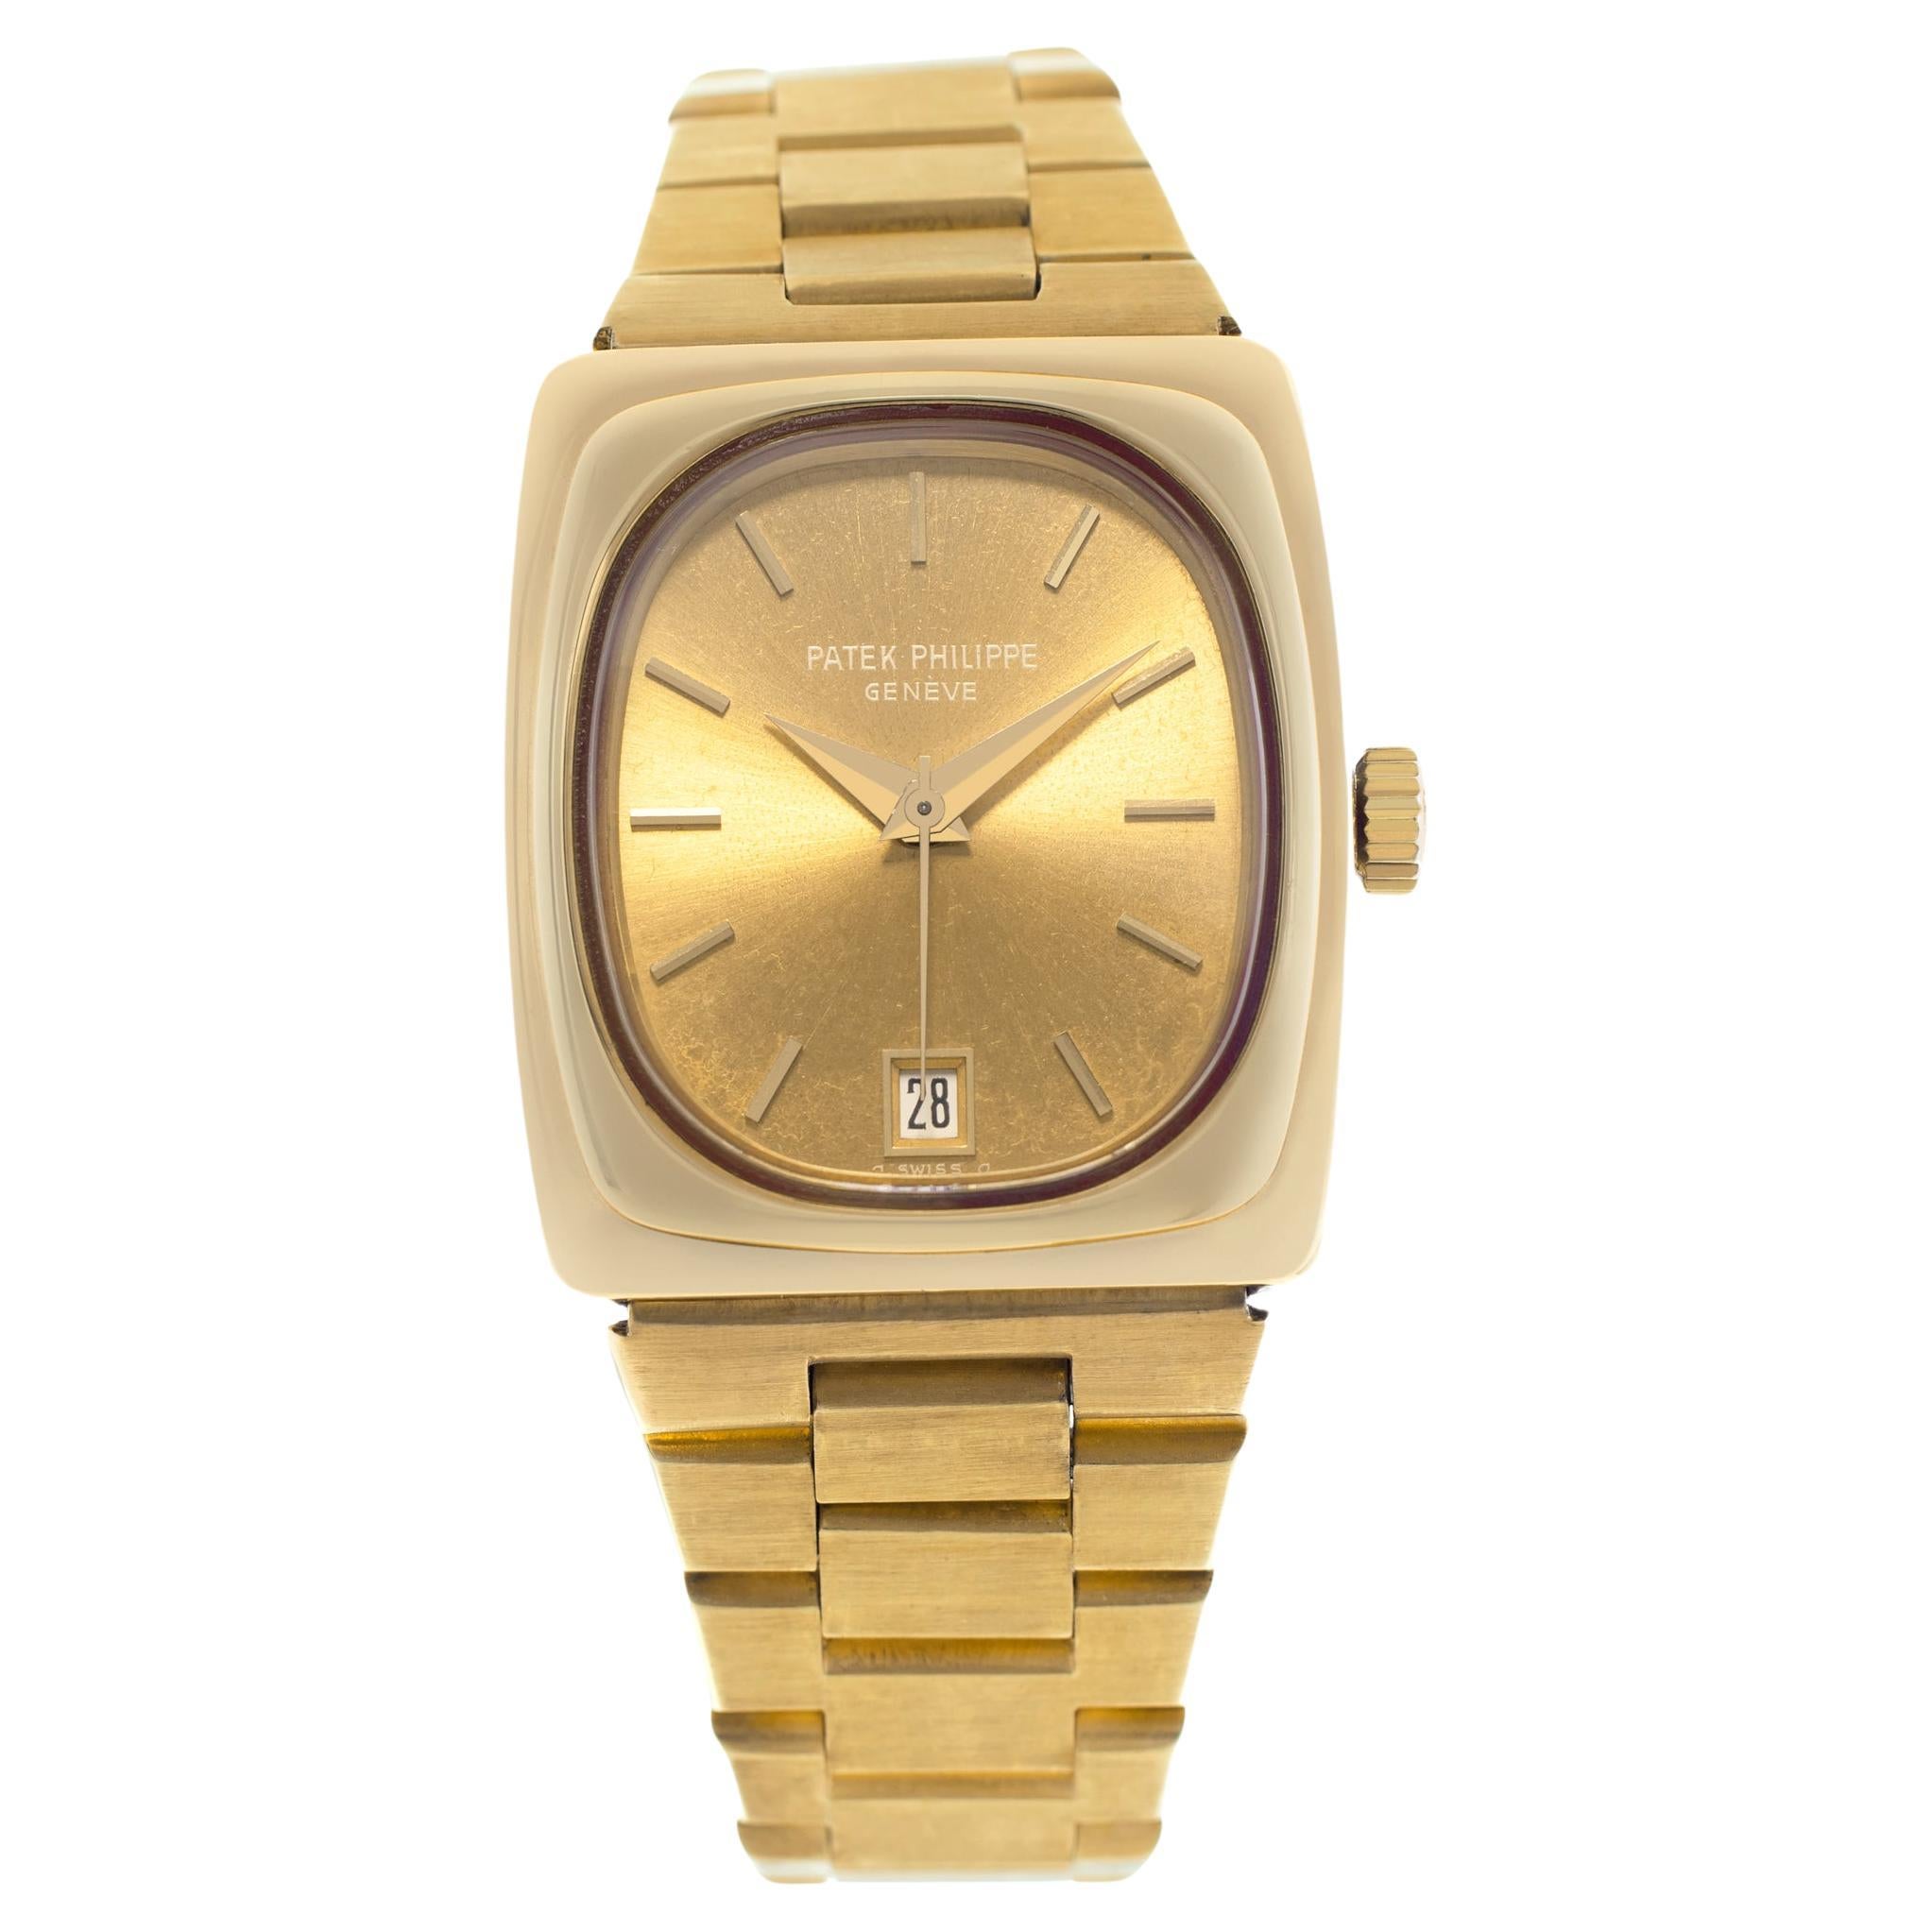 Patek Philippe Beta 21 3603 1 in yellow gold 37mm Quartz watch For Sale